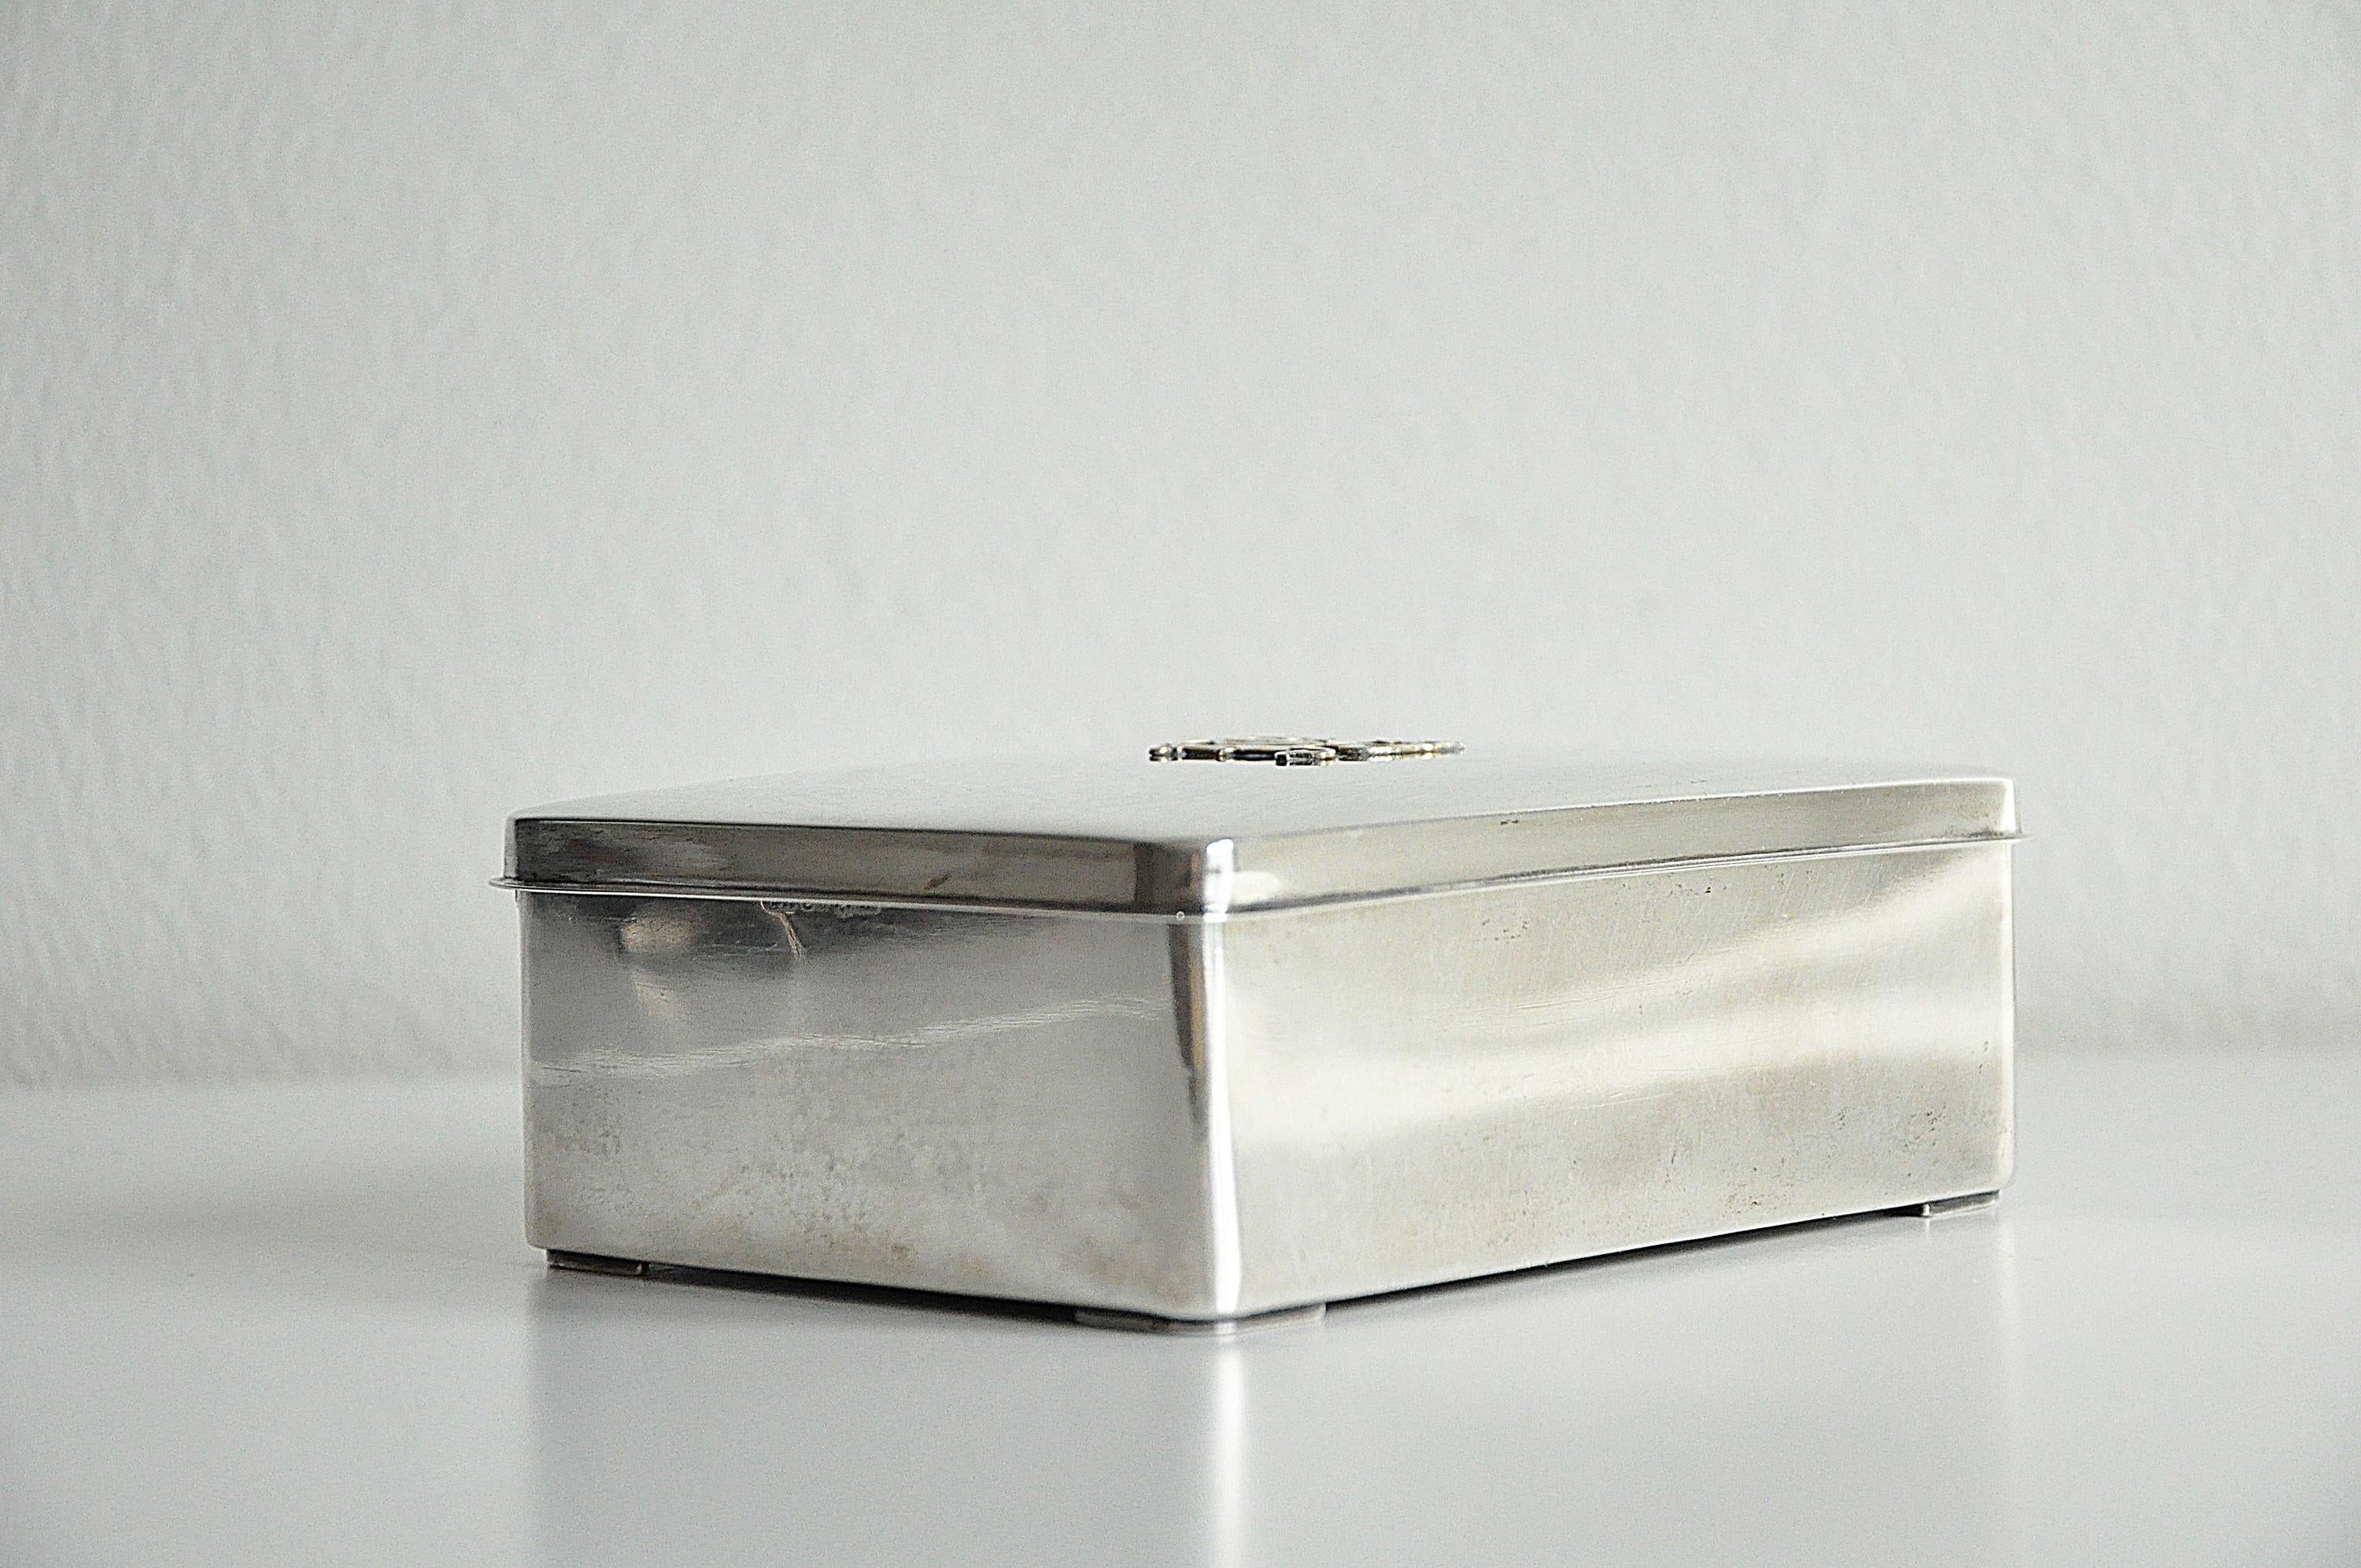 Scandinavian Modern Silver Box from C. G. Hallberg, Sweden -1937 For Sale 2